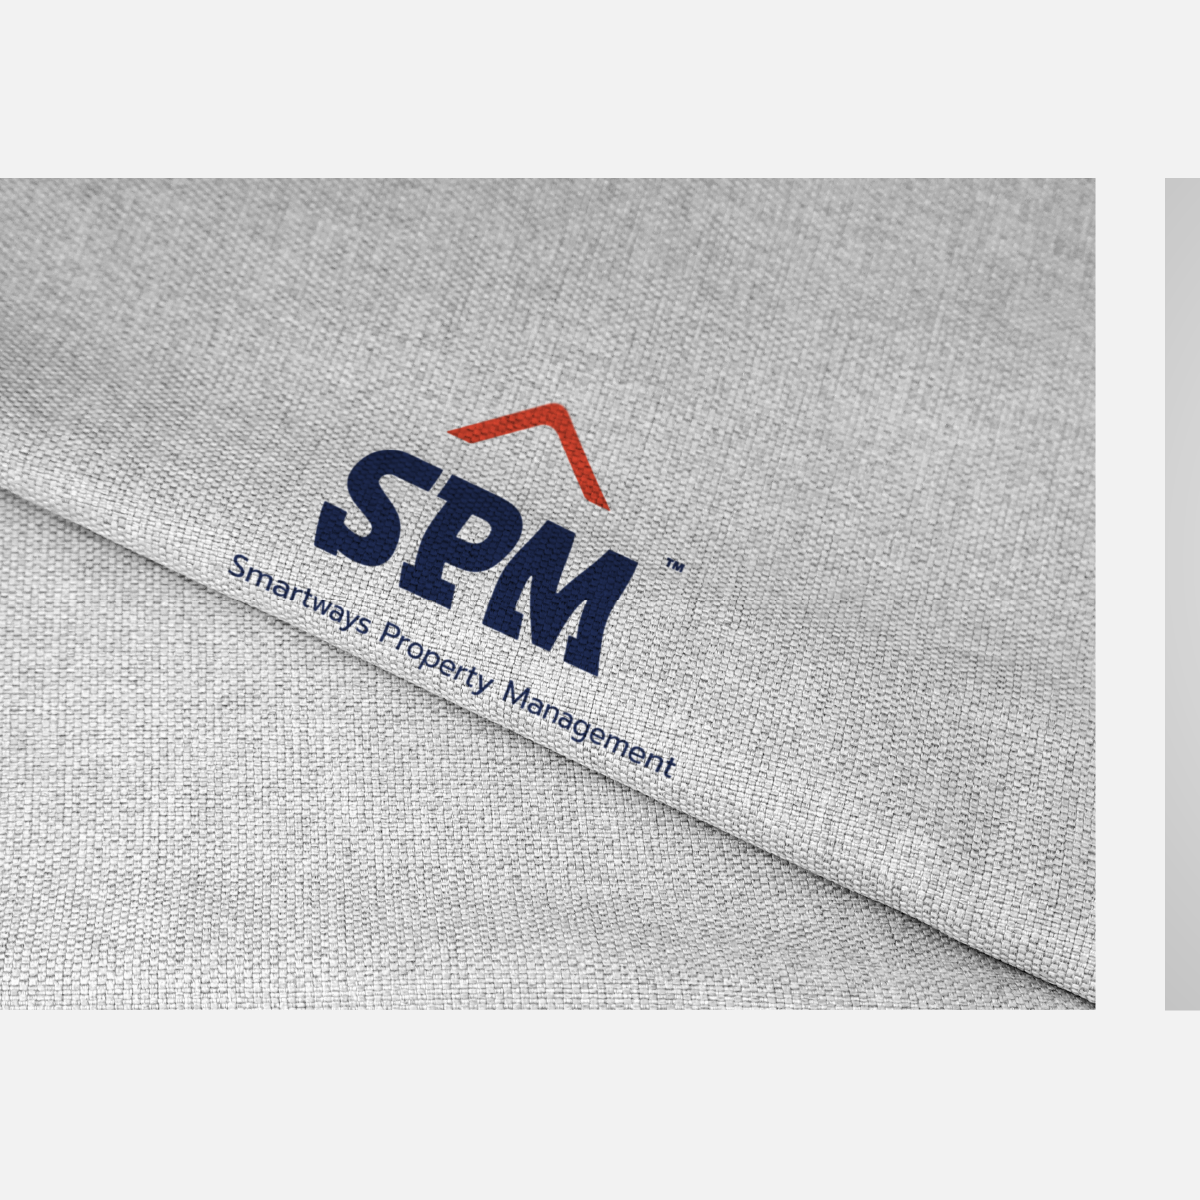 Smartways Property Management Logo on a Piece of Cloth